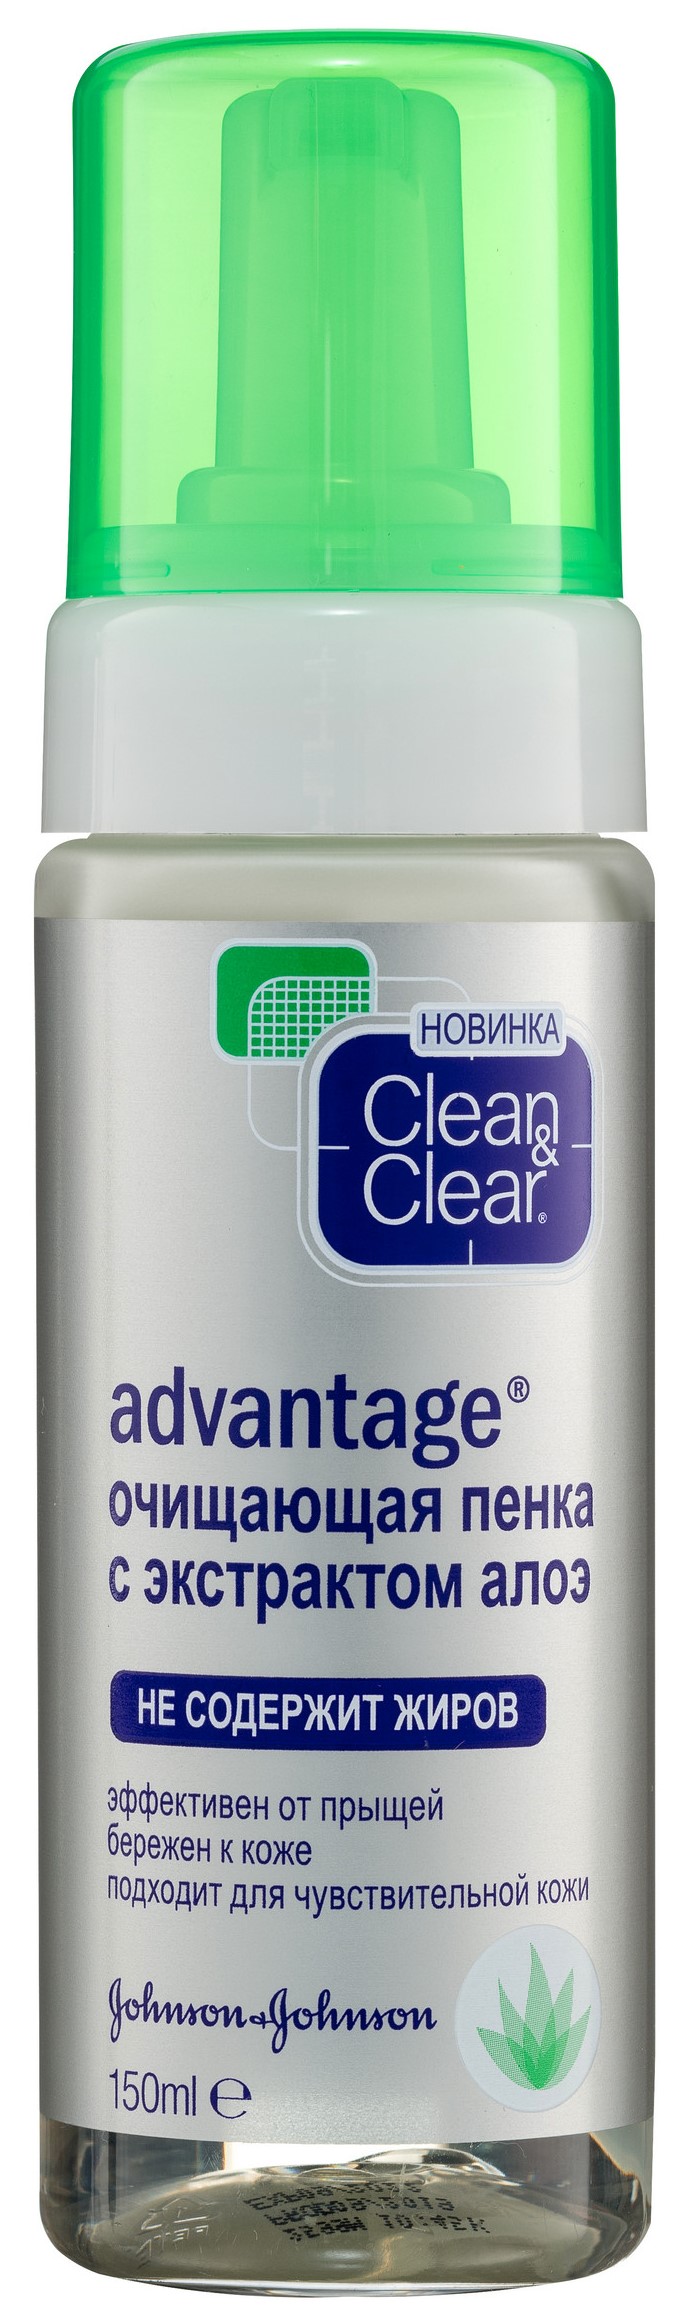 Очищающая пенка с экстрактом алоэ Clean&Clear Advantage 150 мл lebelage пенка очищающая с экстрактом алоэ 180 0